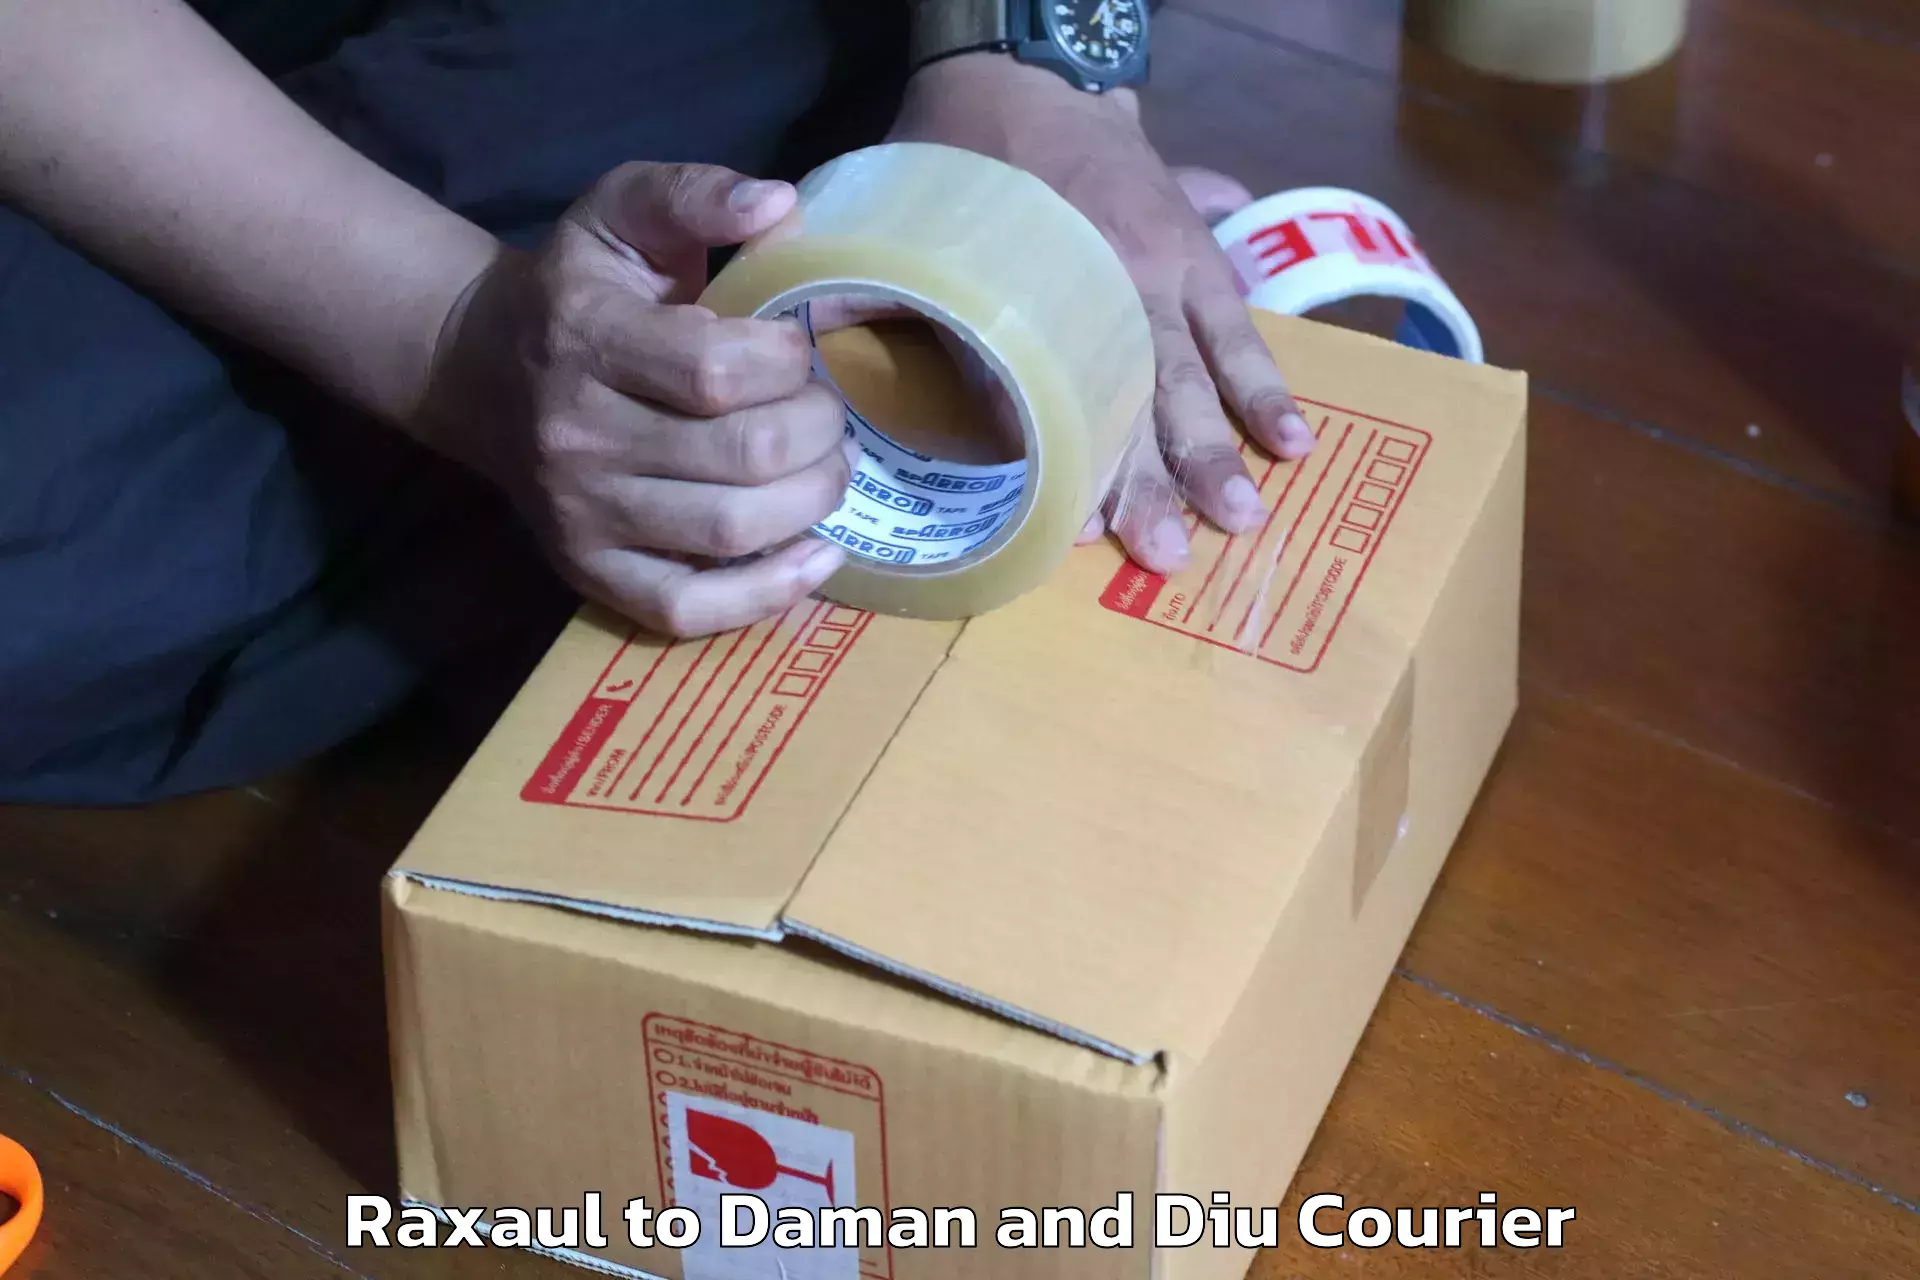 Professional moving company Raxaul to Daman